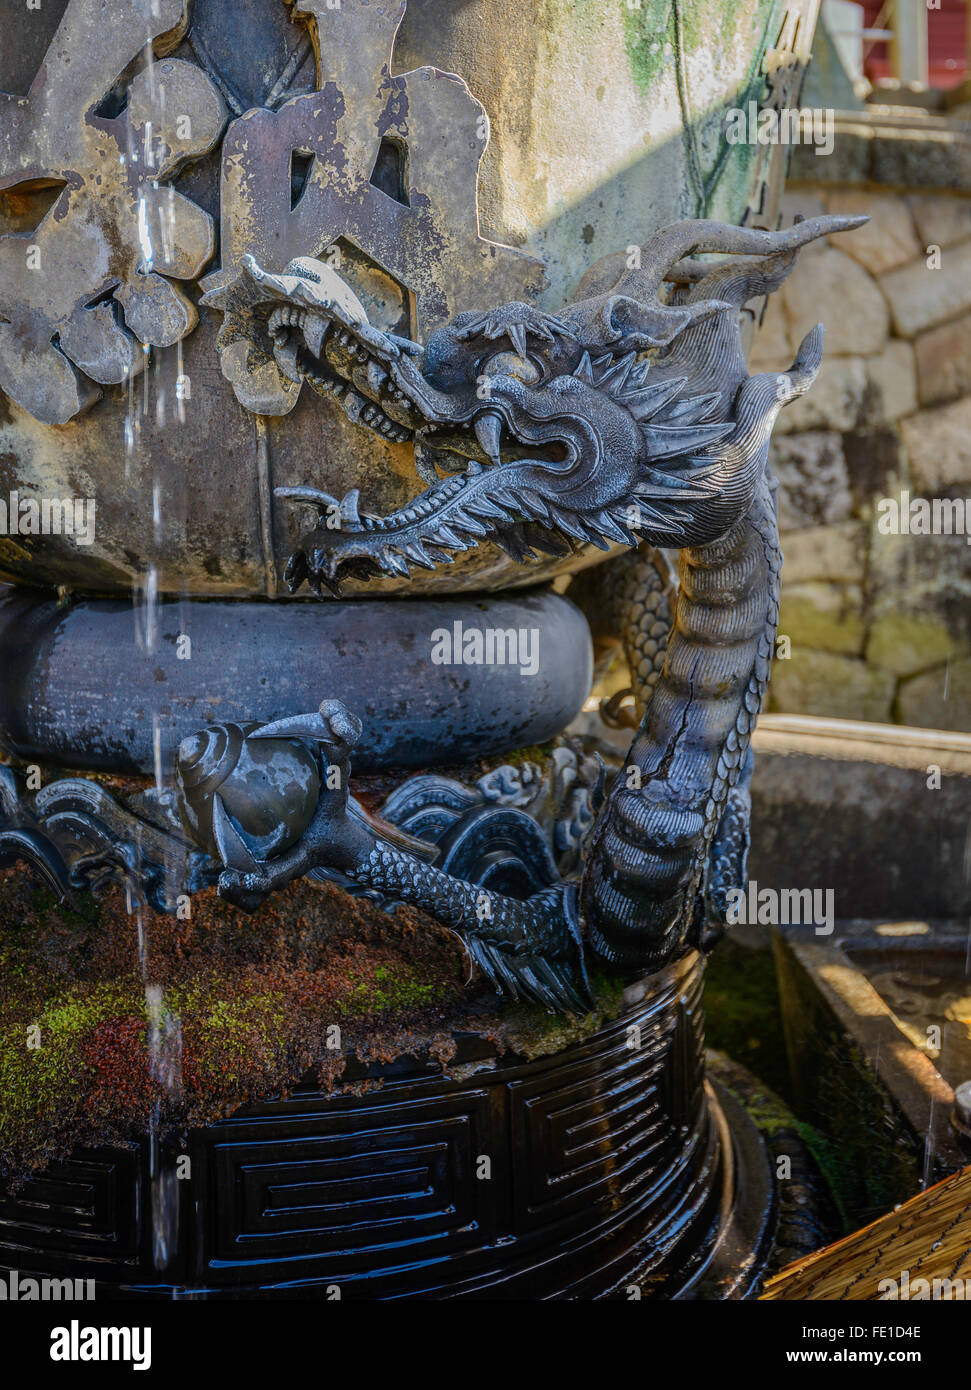 Dragon su una fontana di acqua di Nara Foto Stock